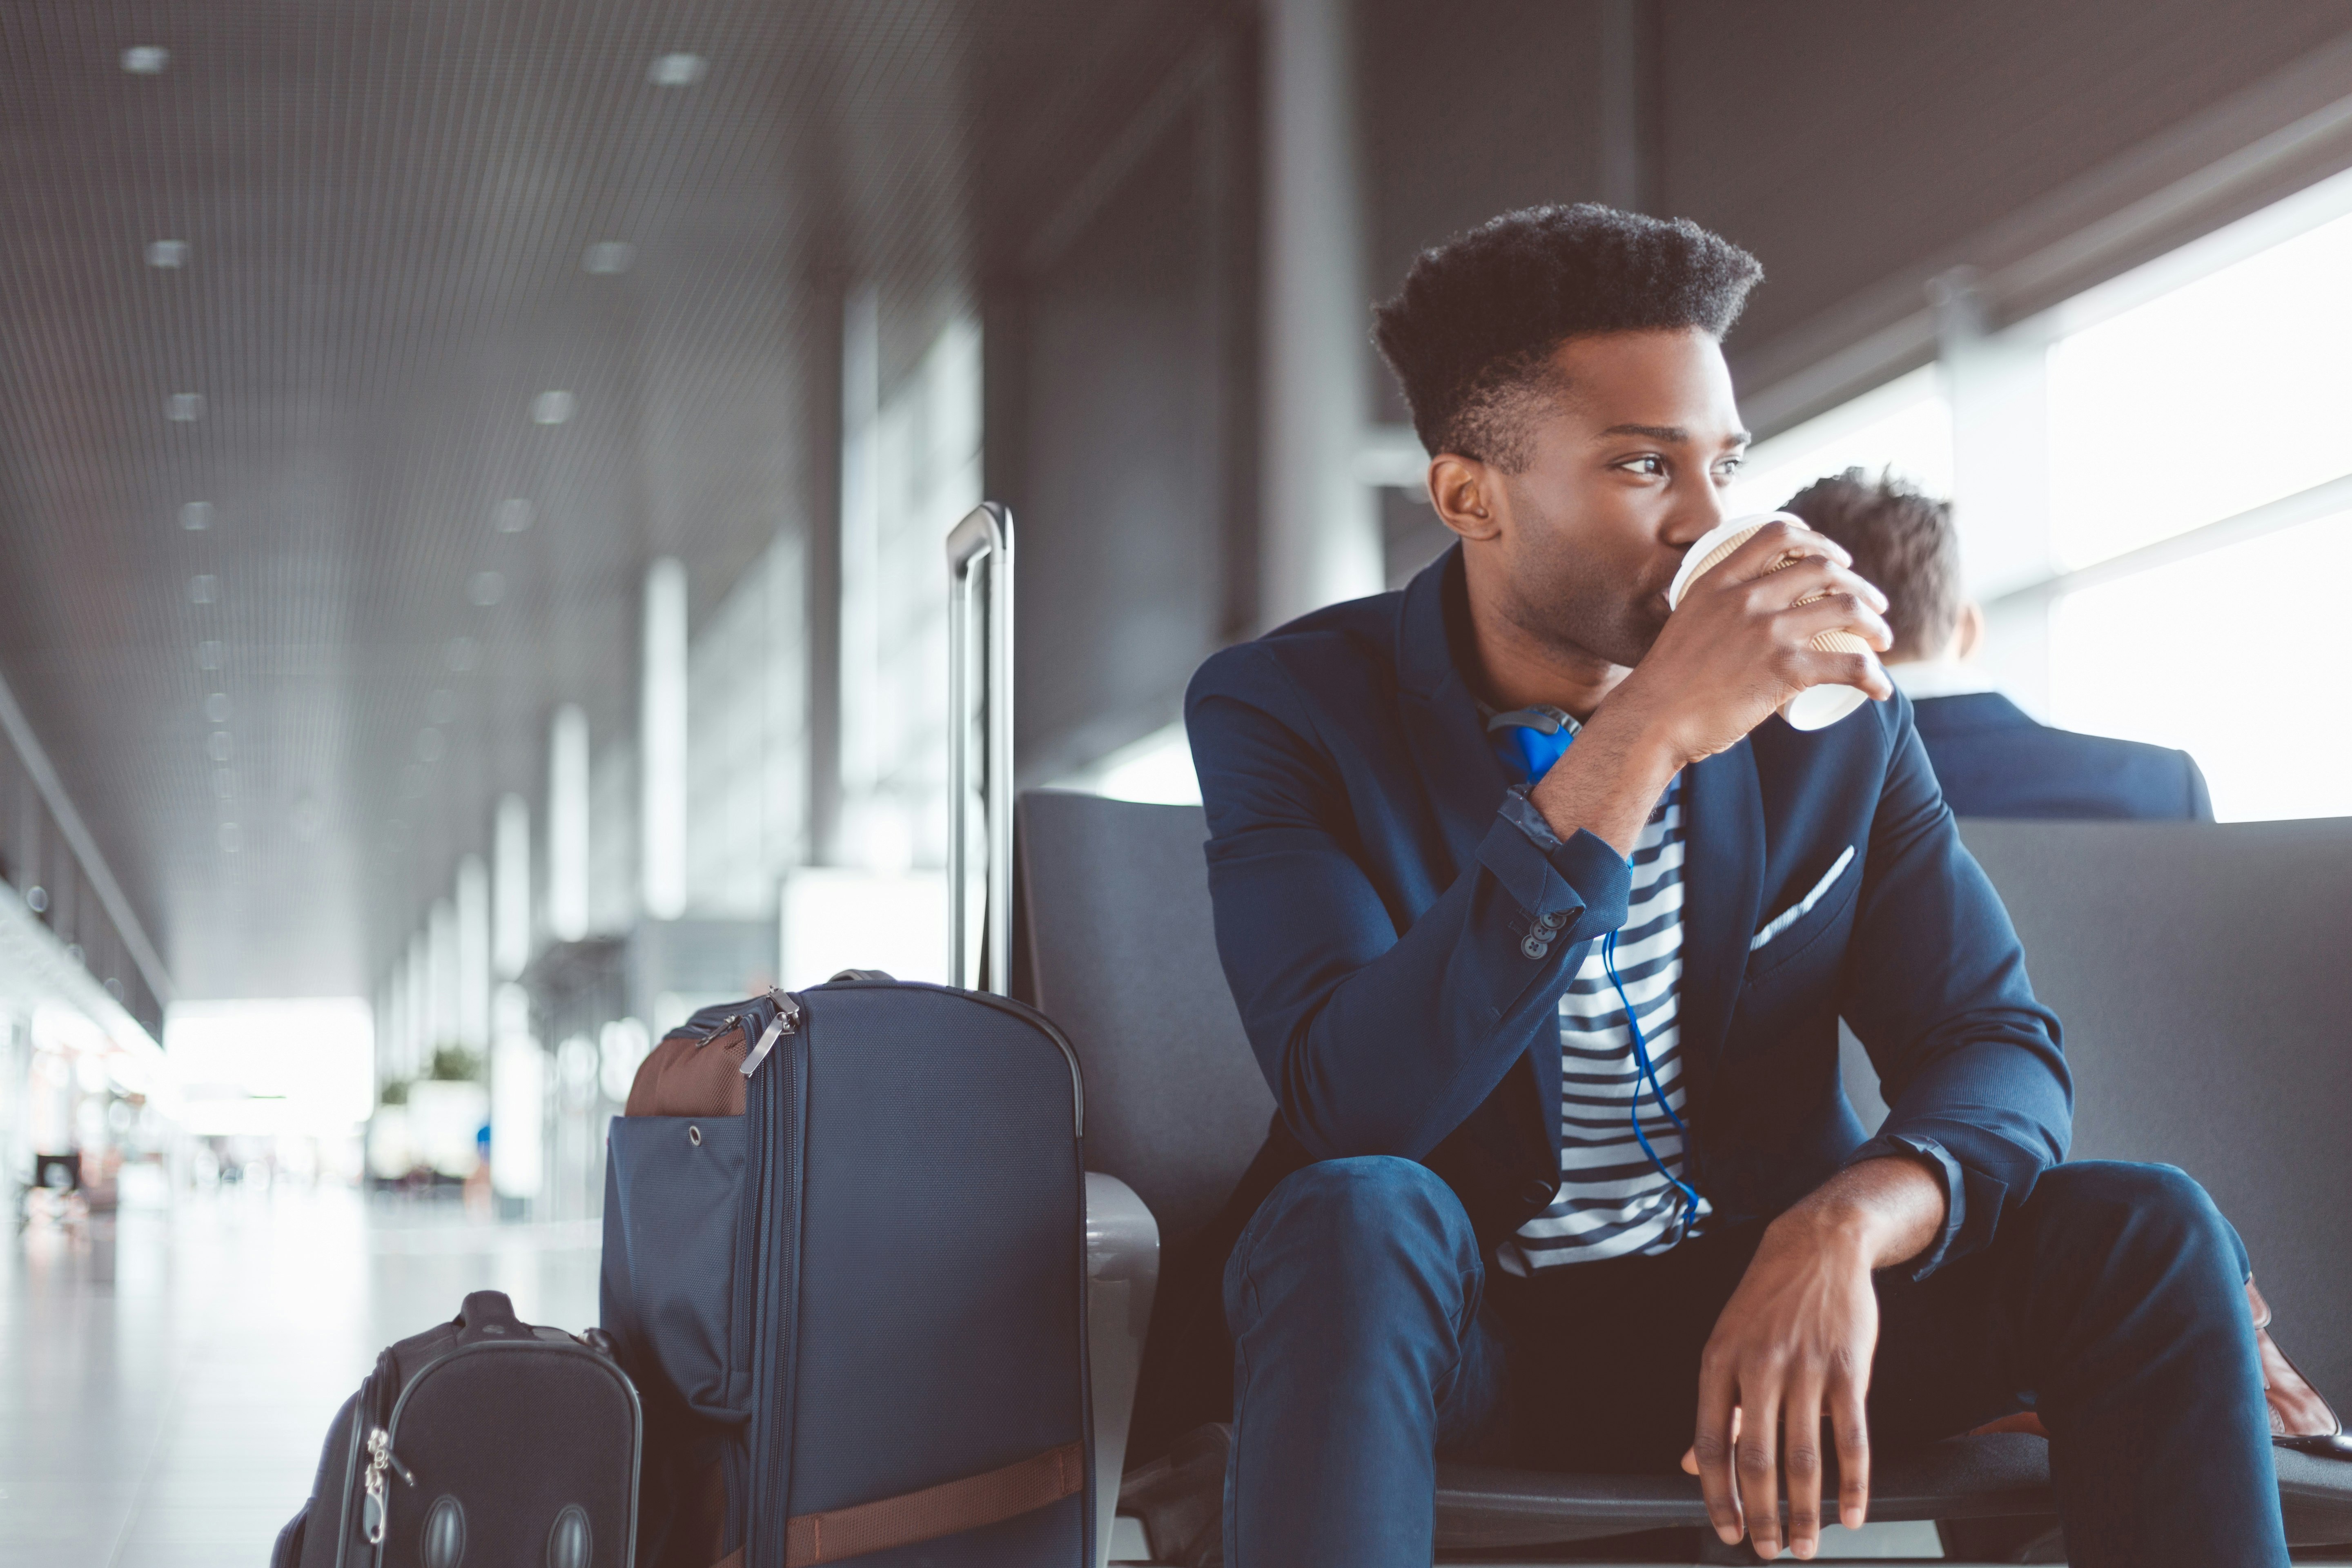 Guy drinking coffee in airport.jpg